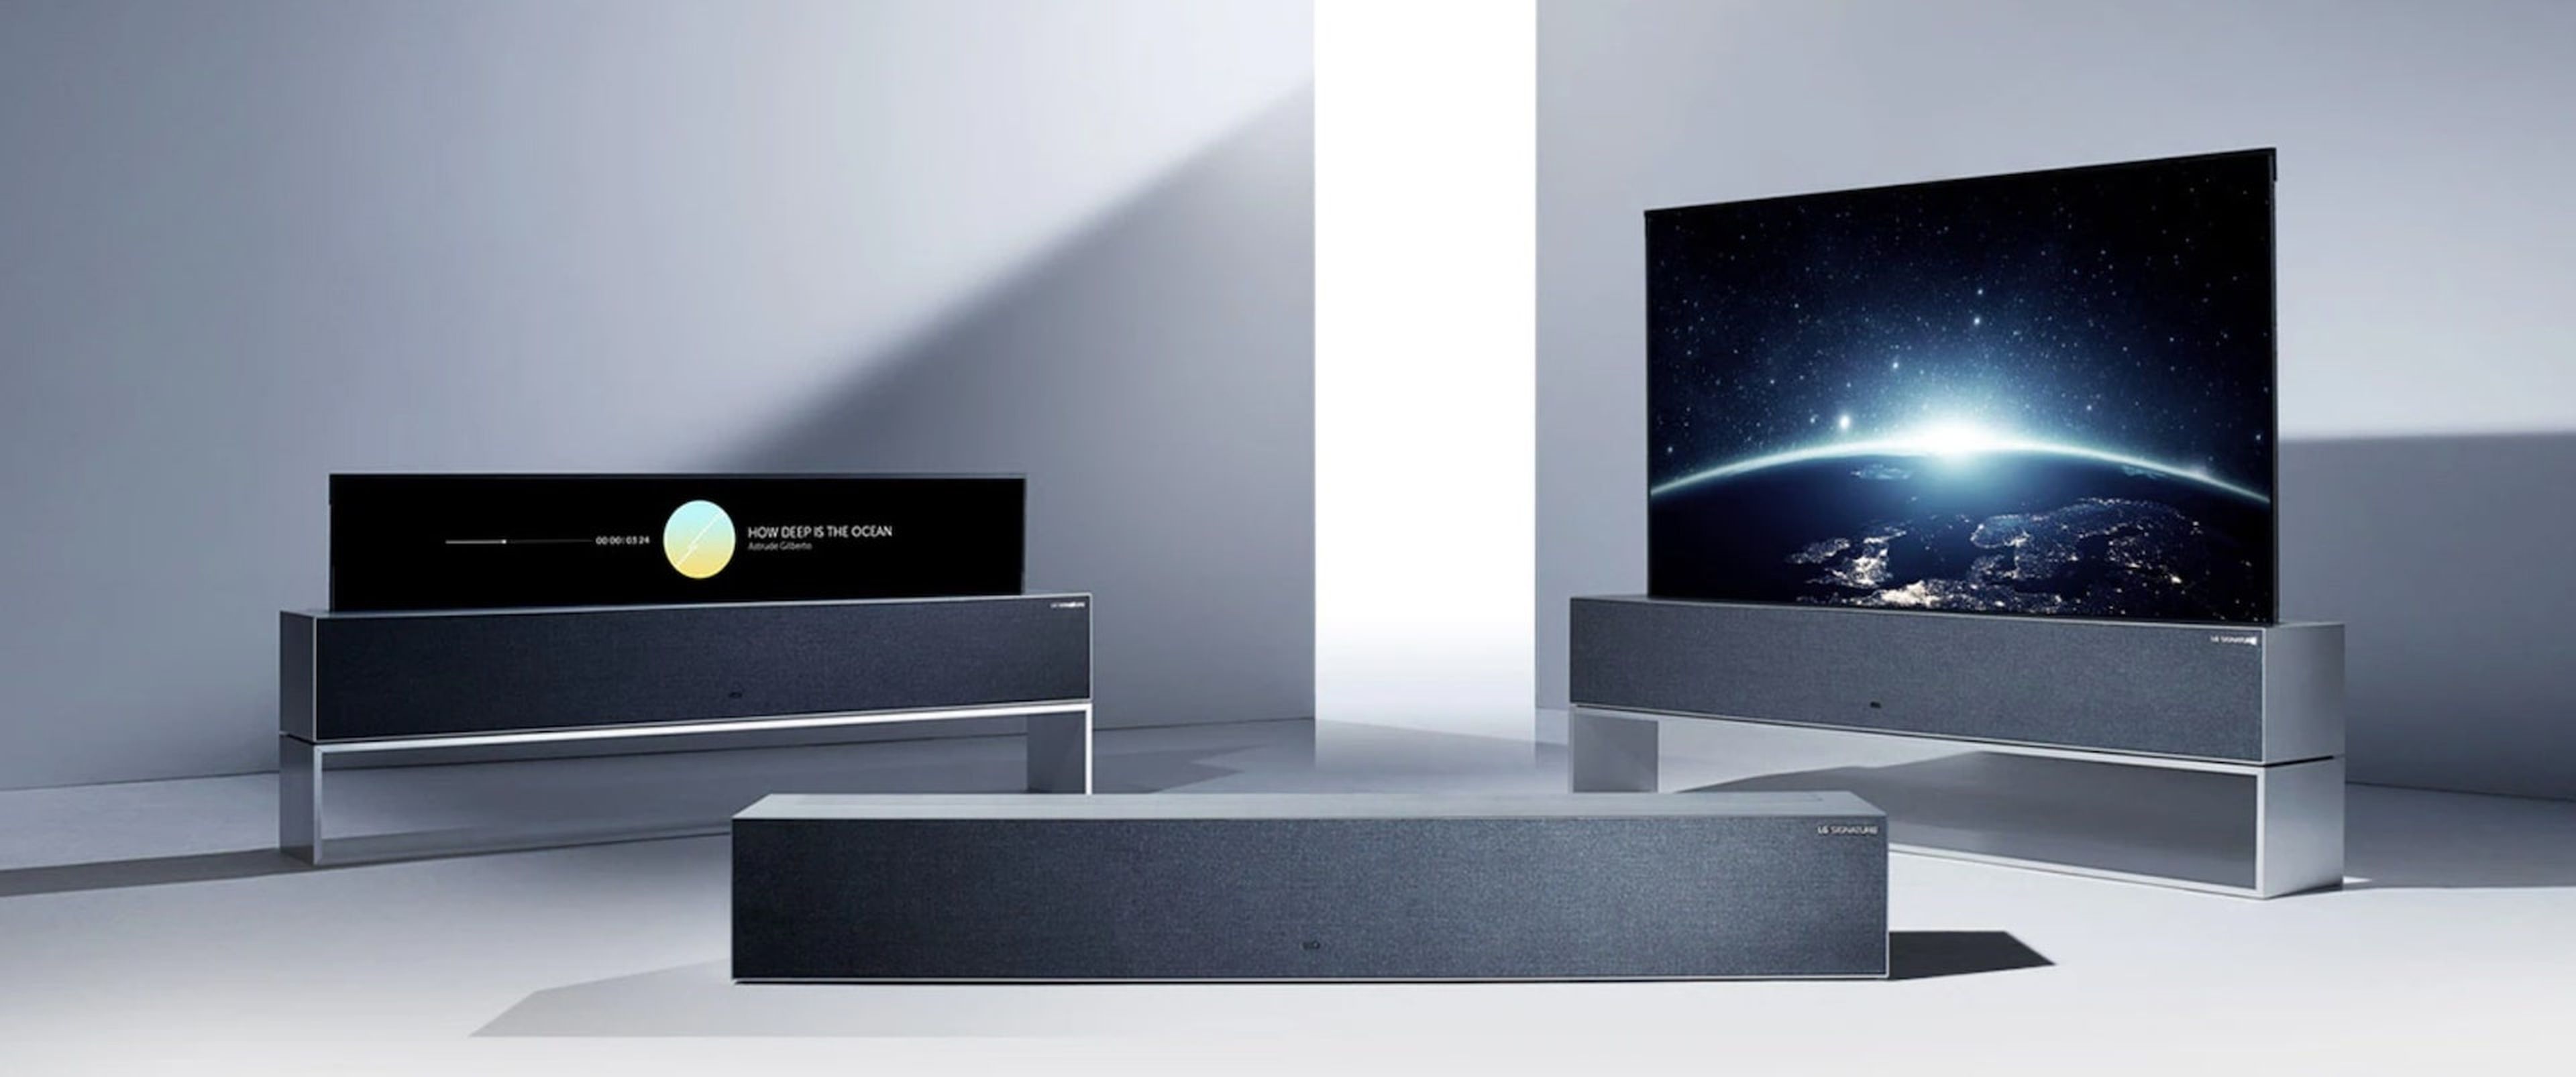 LG Signature OLED TV R, televisor enrollable de LG, que se puso a la venta en 2020 por 87.000 dólares.